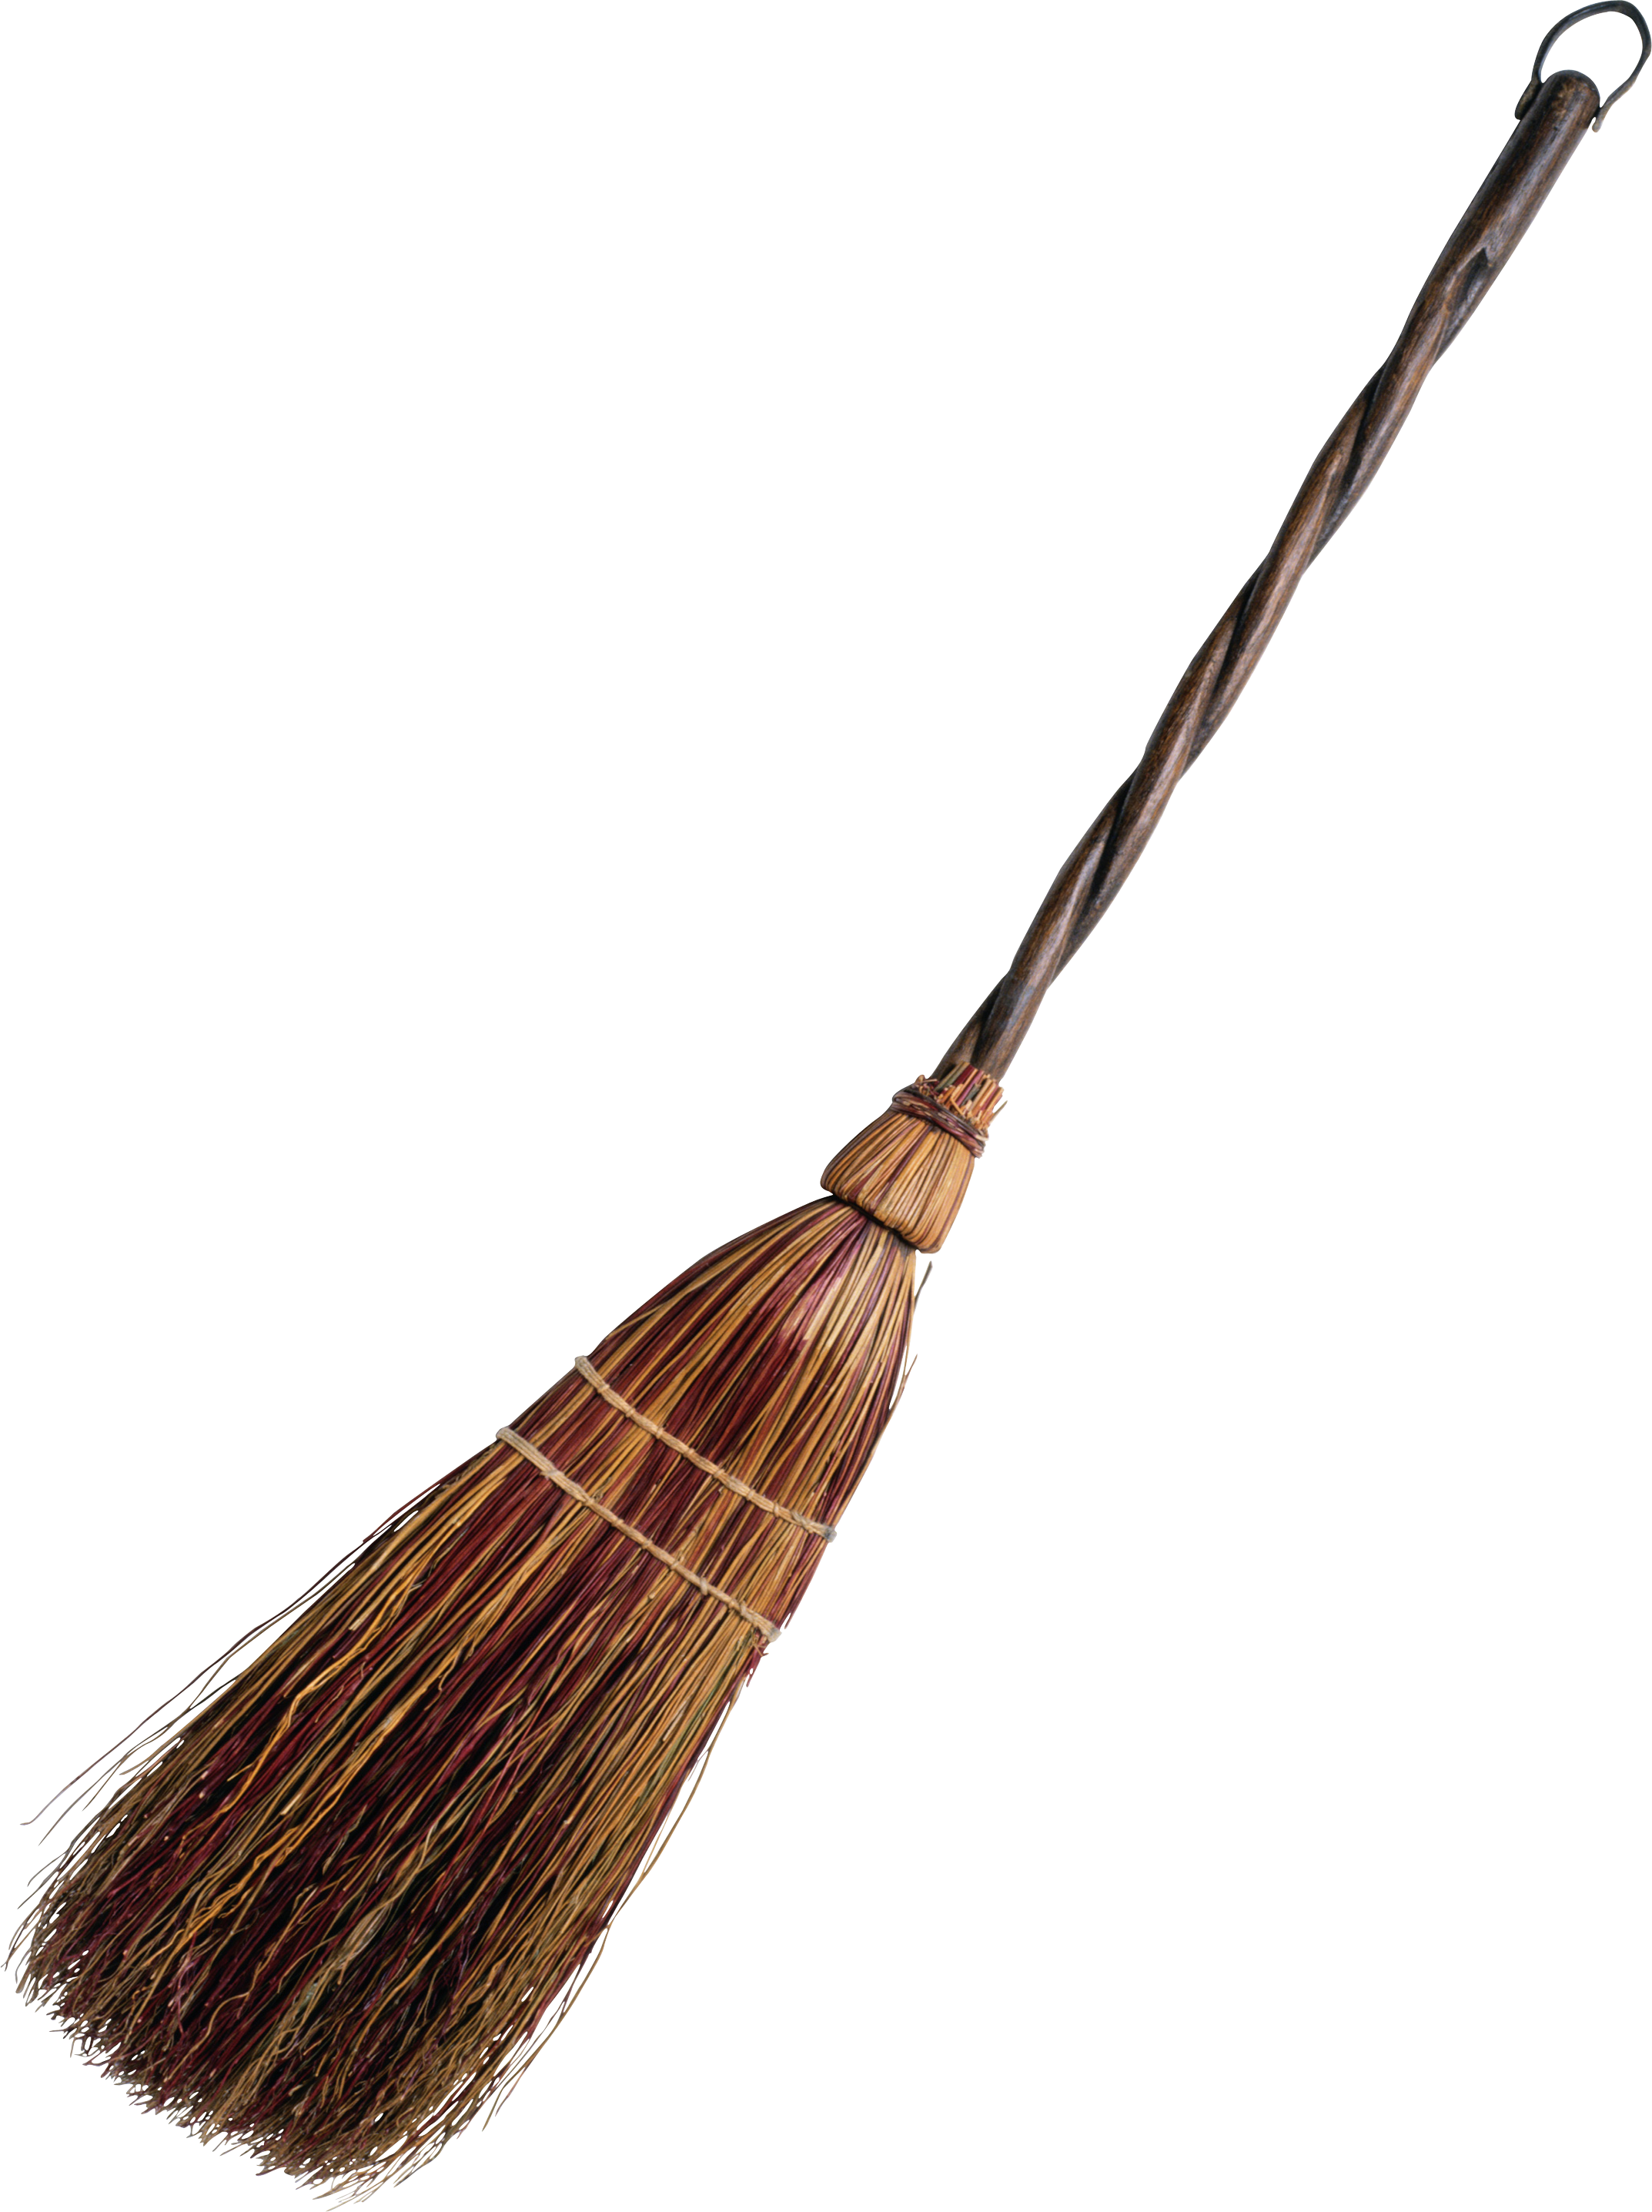 Hard Broom PNG - 148872